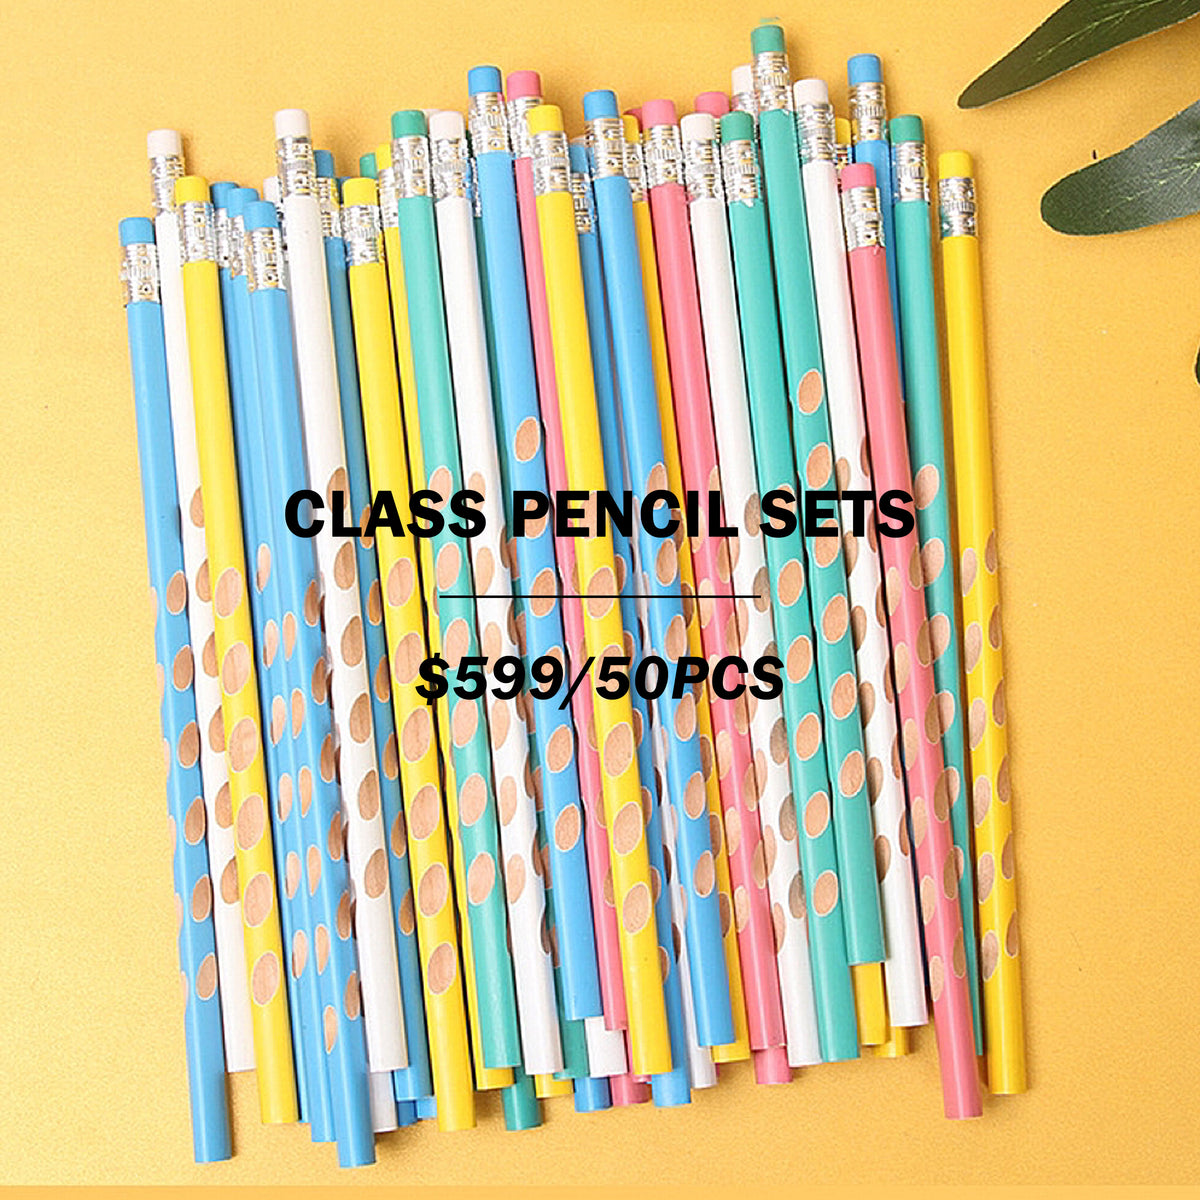 【COMPANY GIFTS】Multicolor stationery pen & eraser pencil printing logo x 50 pcs | 馬卡龍色鉛筆50件套訂製 橡皮頭鉛筆訂製